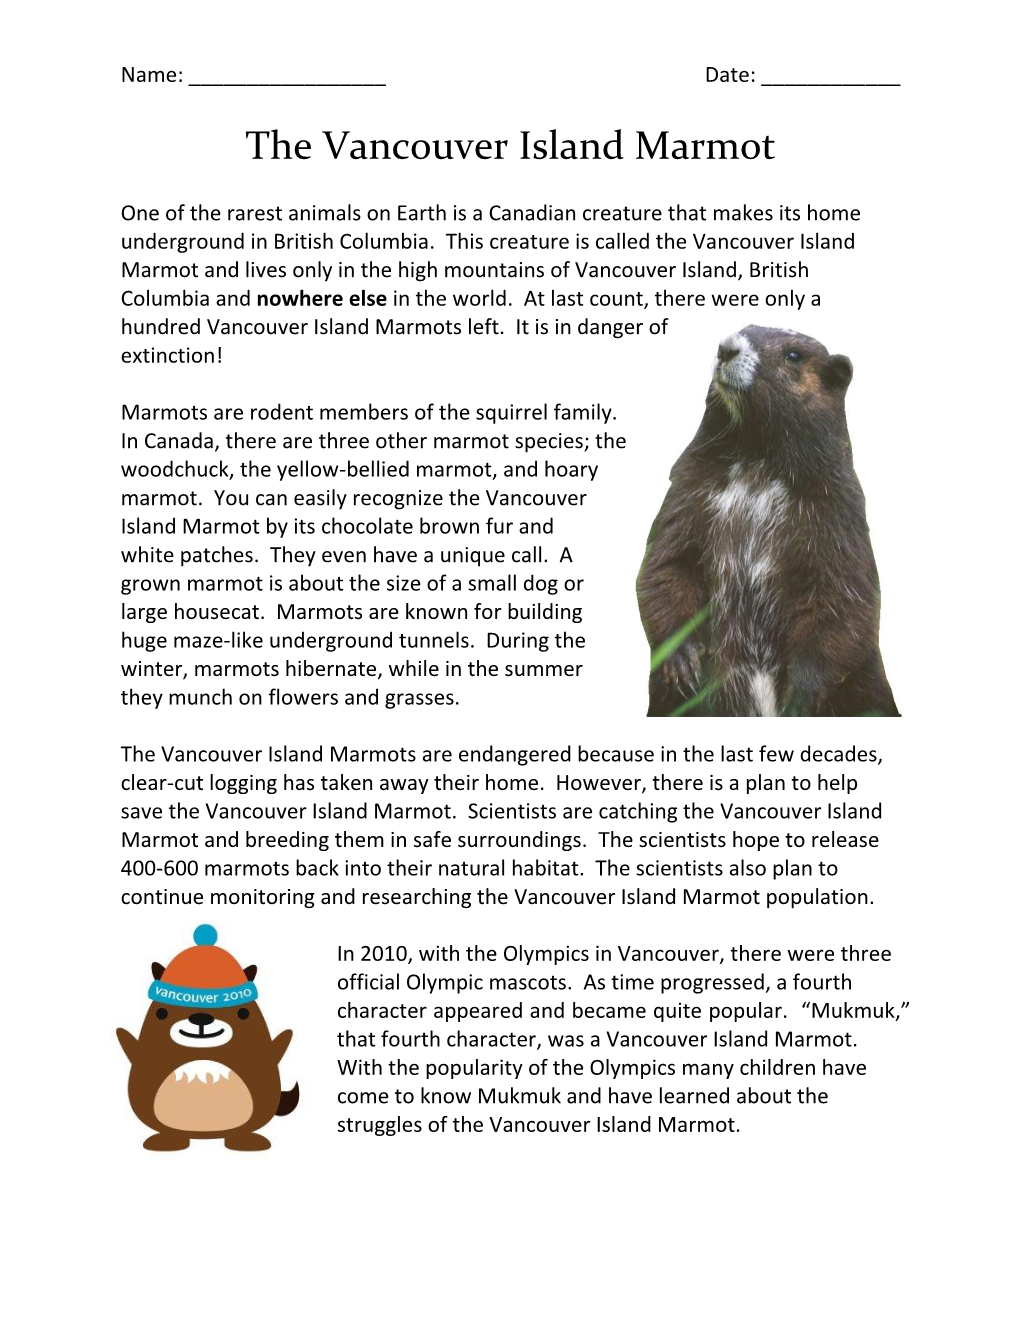 The Vancouver Island Marmot